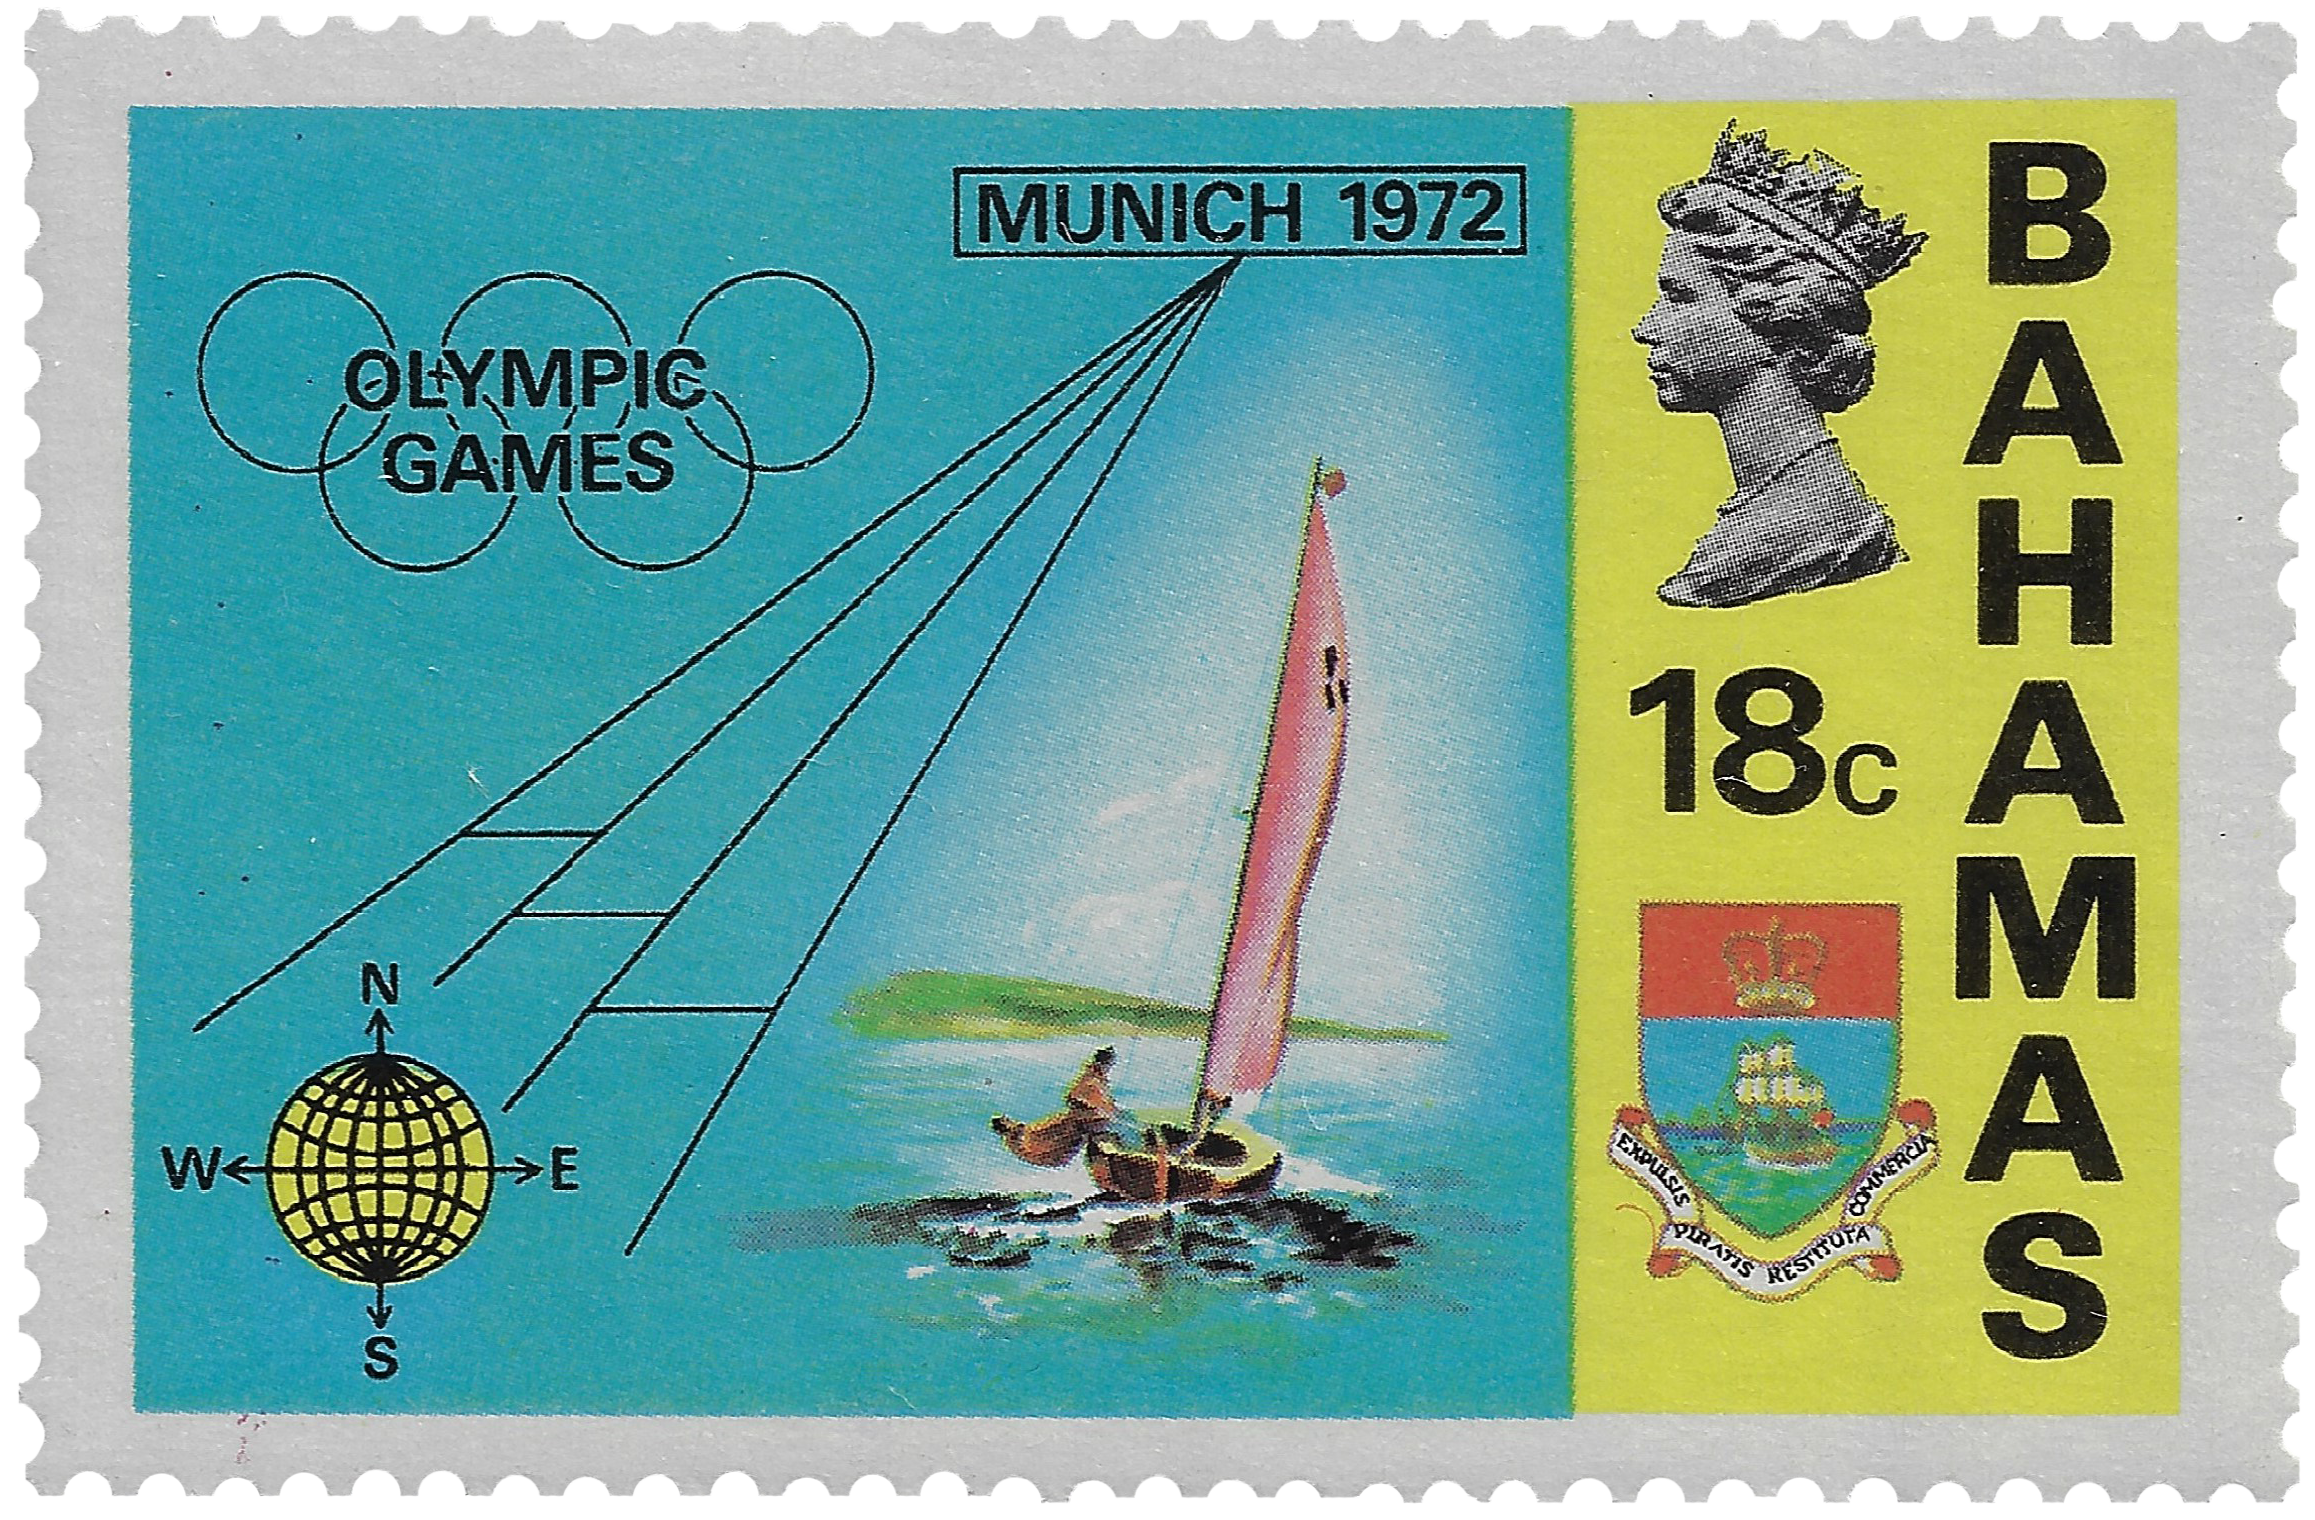 18c 1972, Olympic Games, Munich